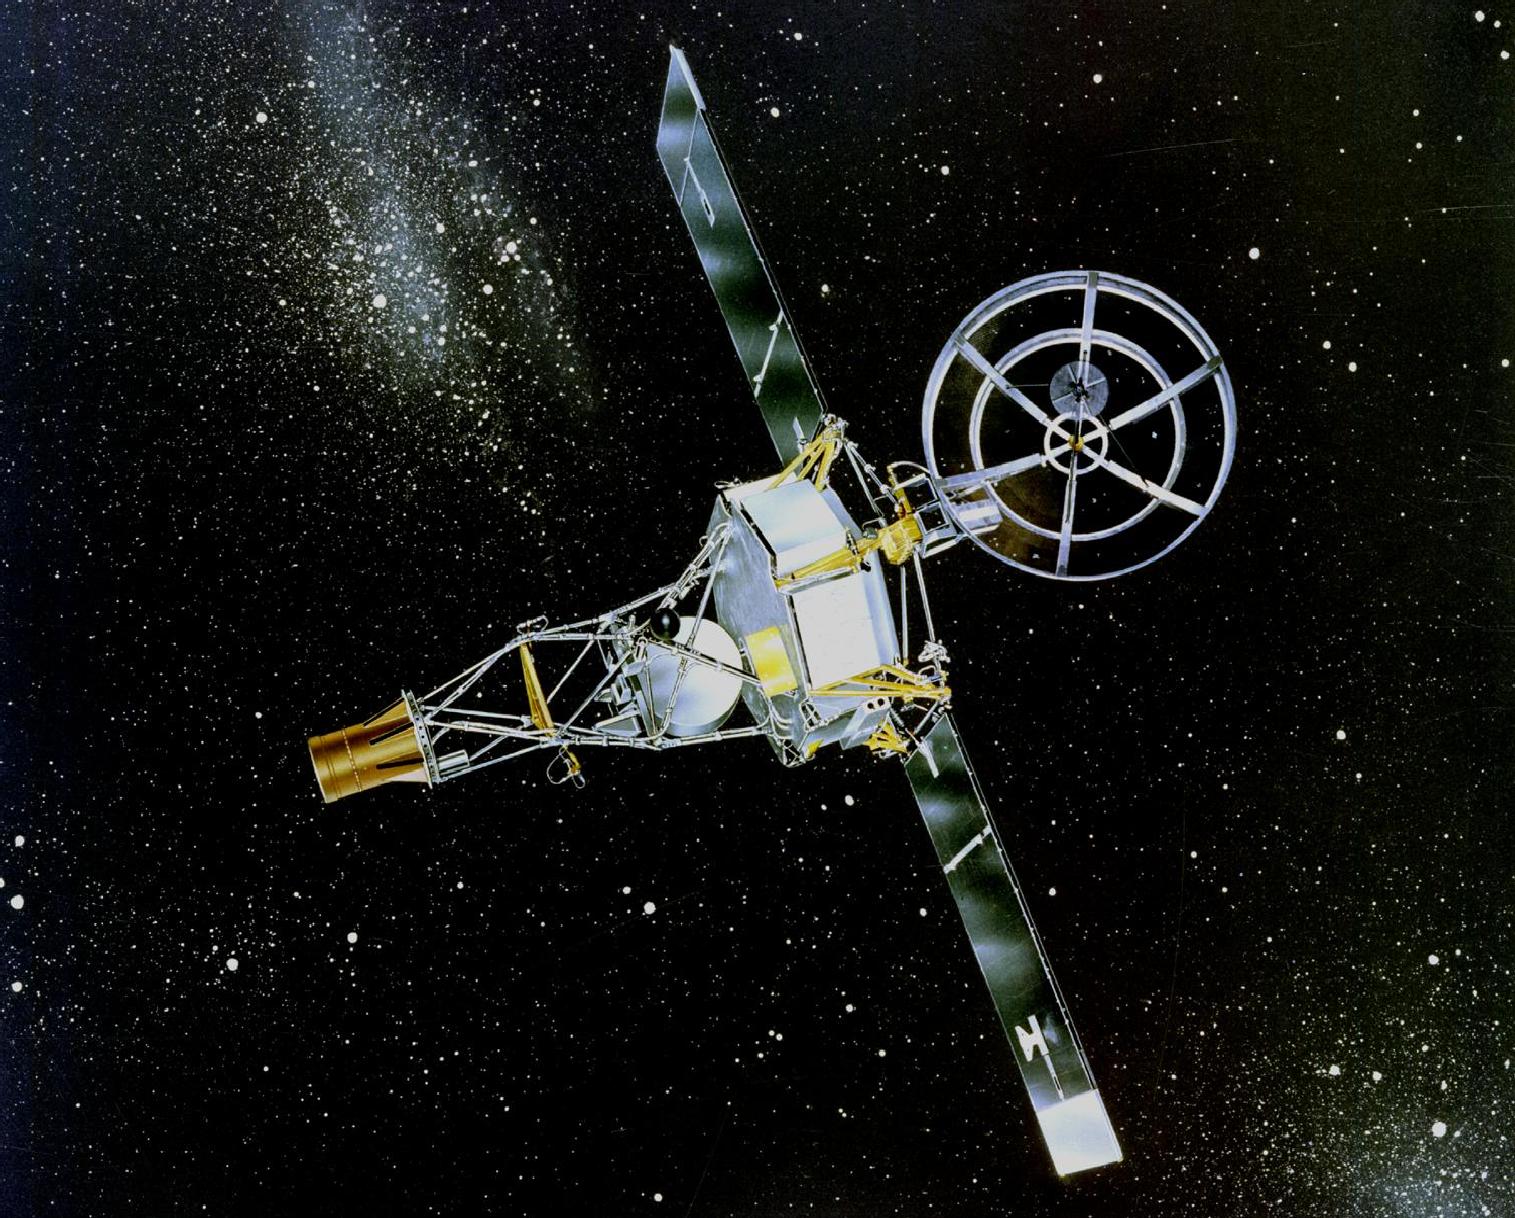 Artist’s impression of the Mariner 2 spacecraft